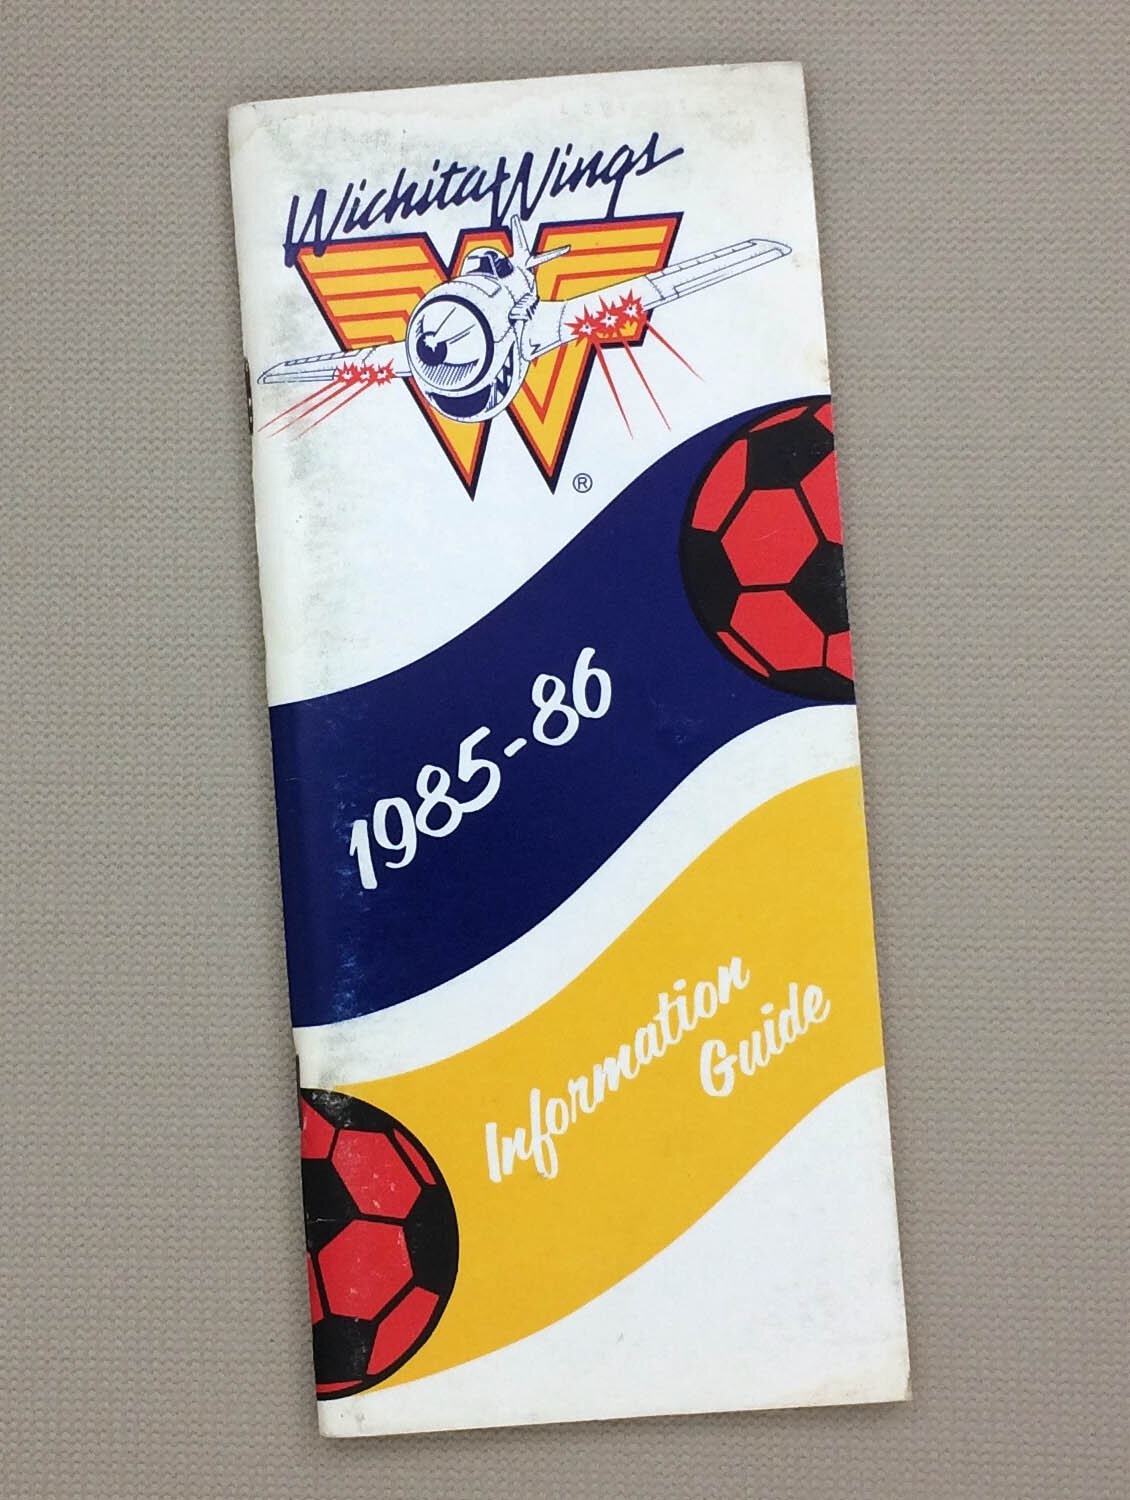 soccer-misl-wichita-wings-1985-86-media-guide.jpg